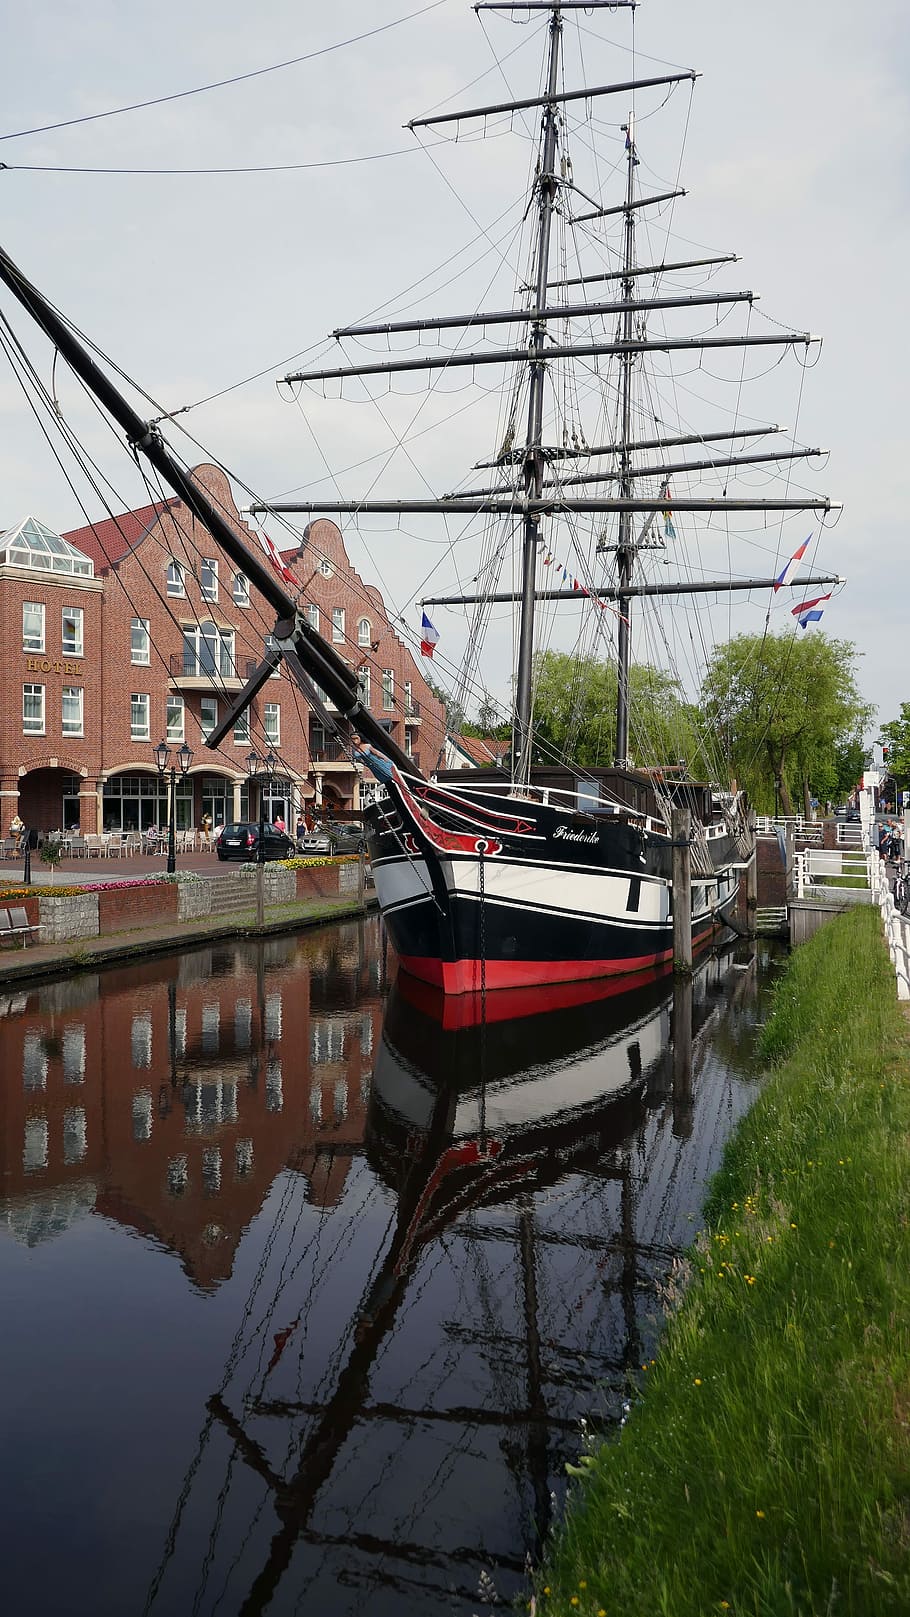 Sailing Vessel, Papenburg, Germany, saver, papenburg germany, shipbuilding, canal, visit, idyllic, reflection